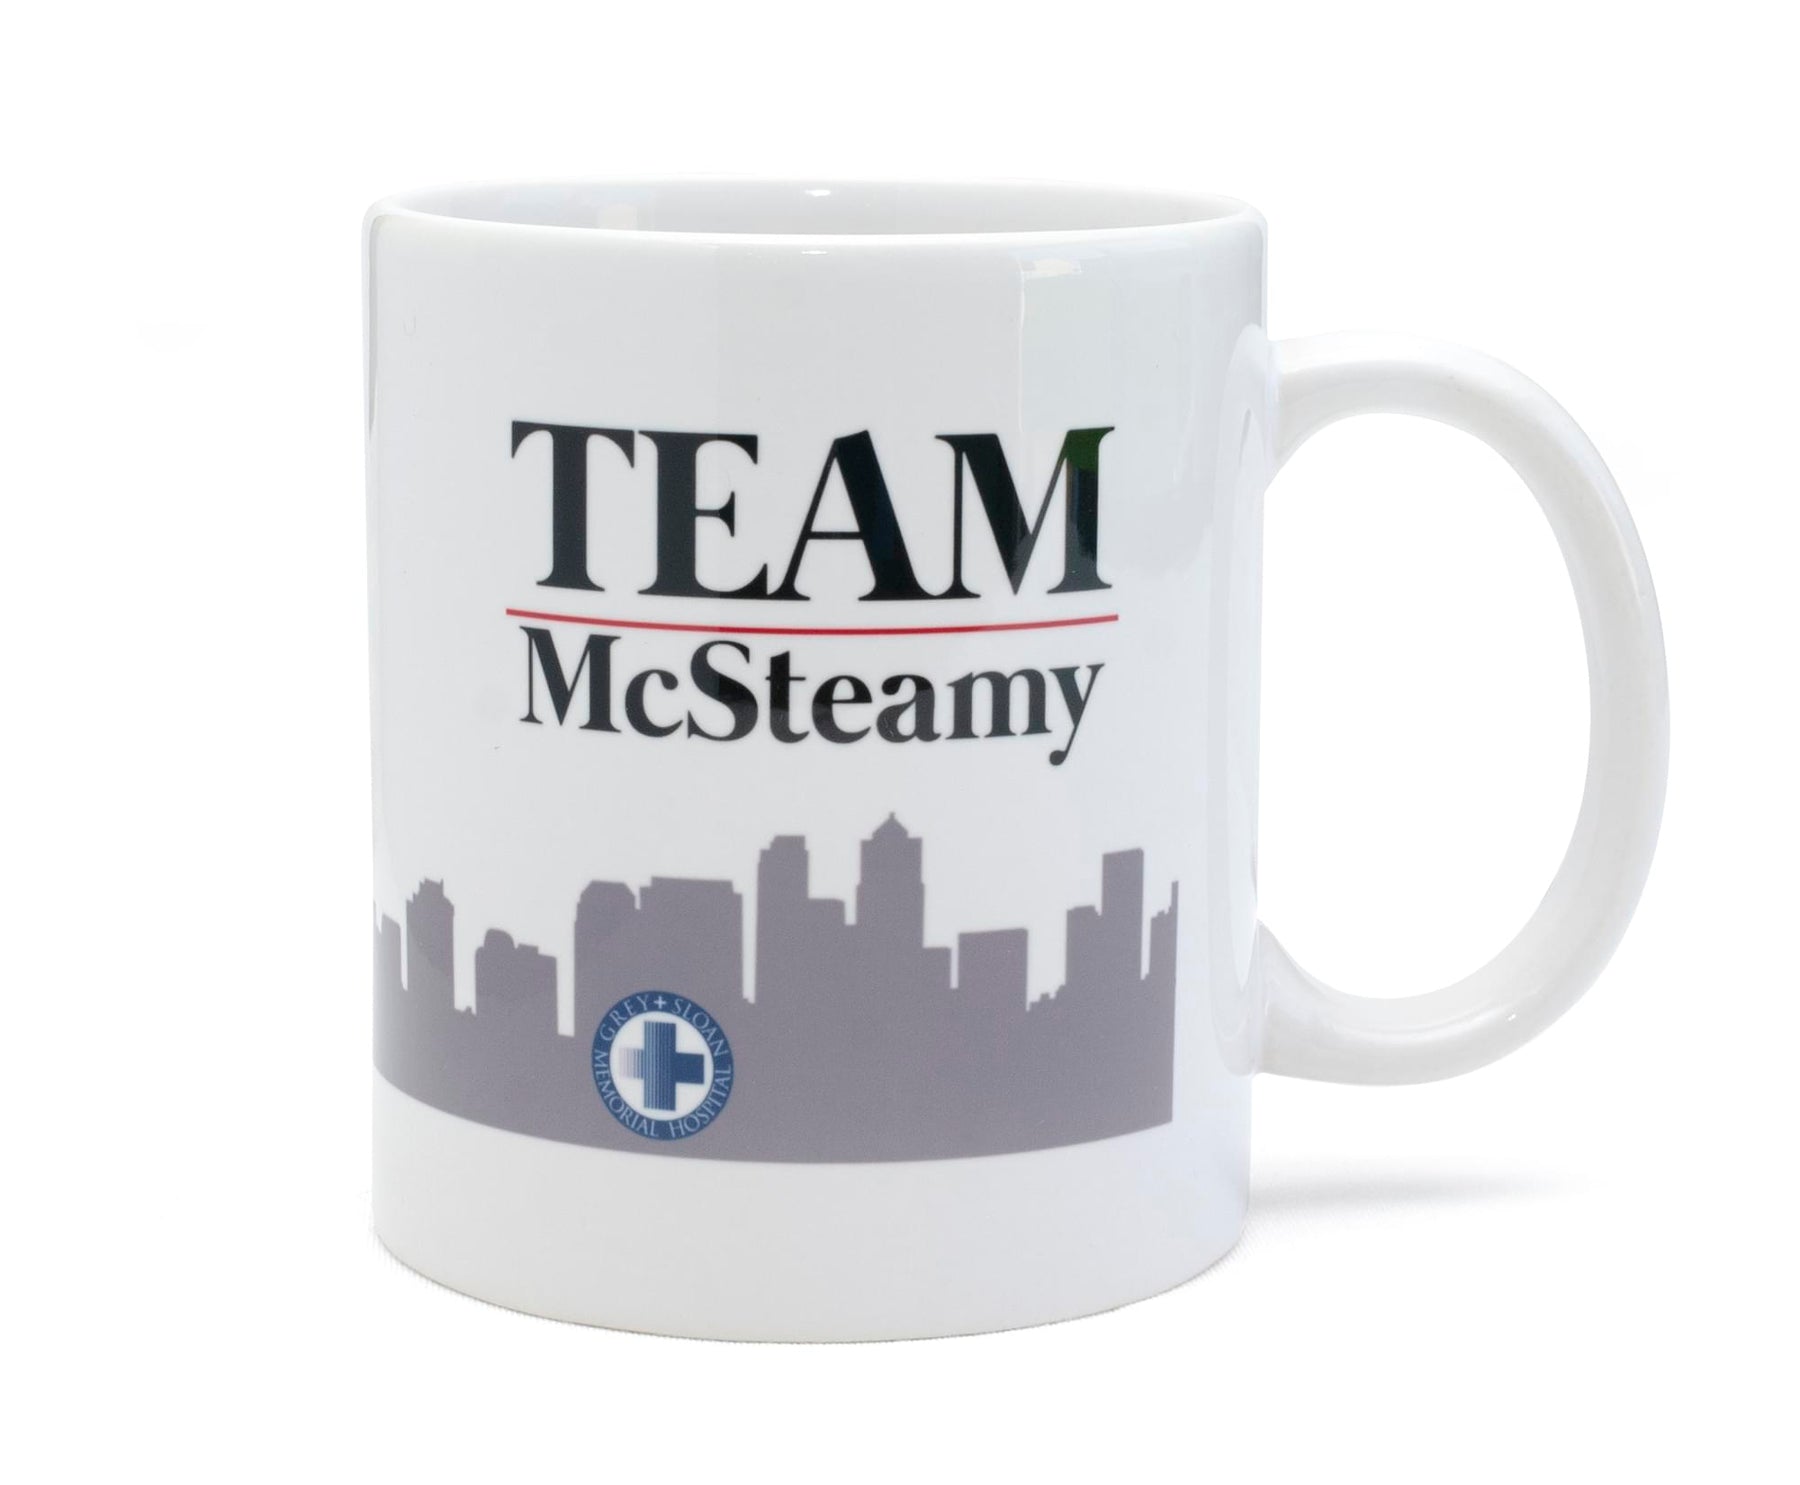 Grey's Anatomy Team McSteamy Ceramic Mug | Holds 11 Ounces